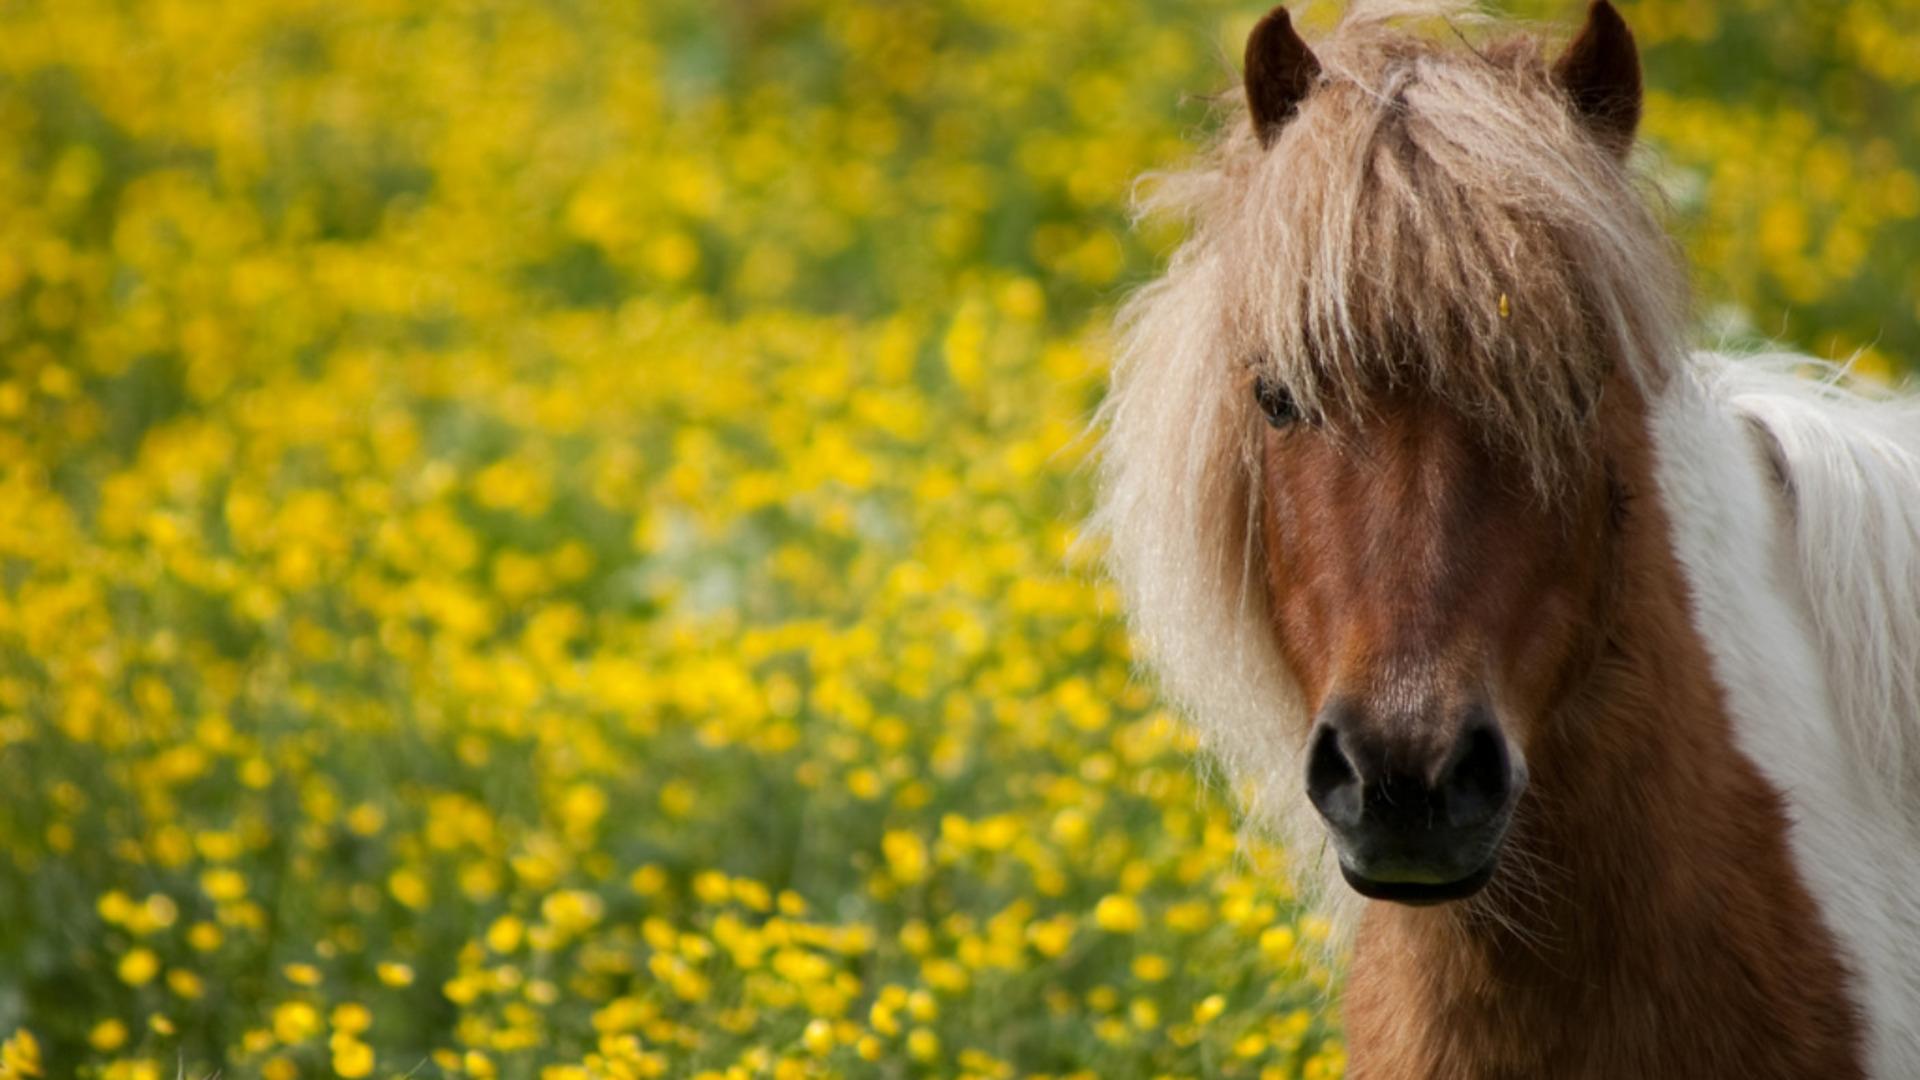 Cute Horse With Long Hair In Yellow Flower Fields HD Wallpaper